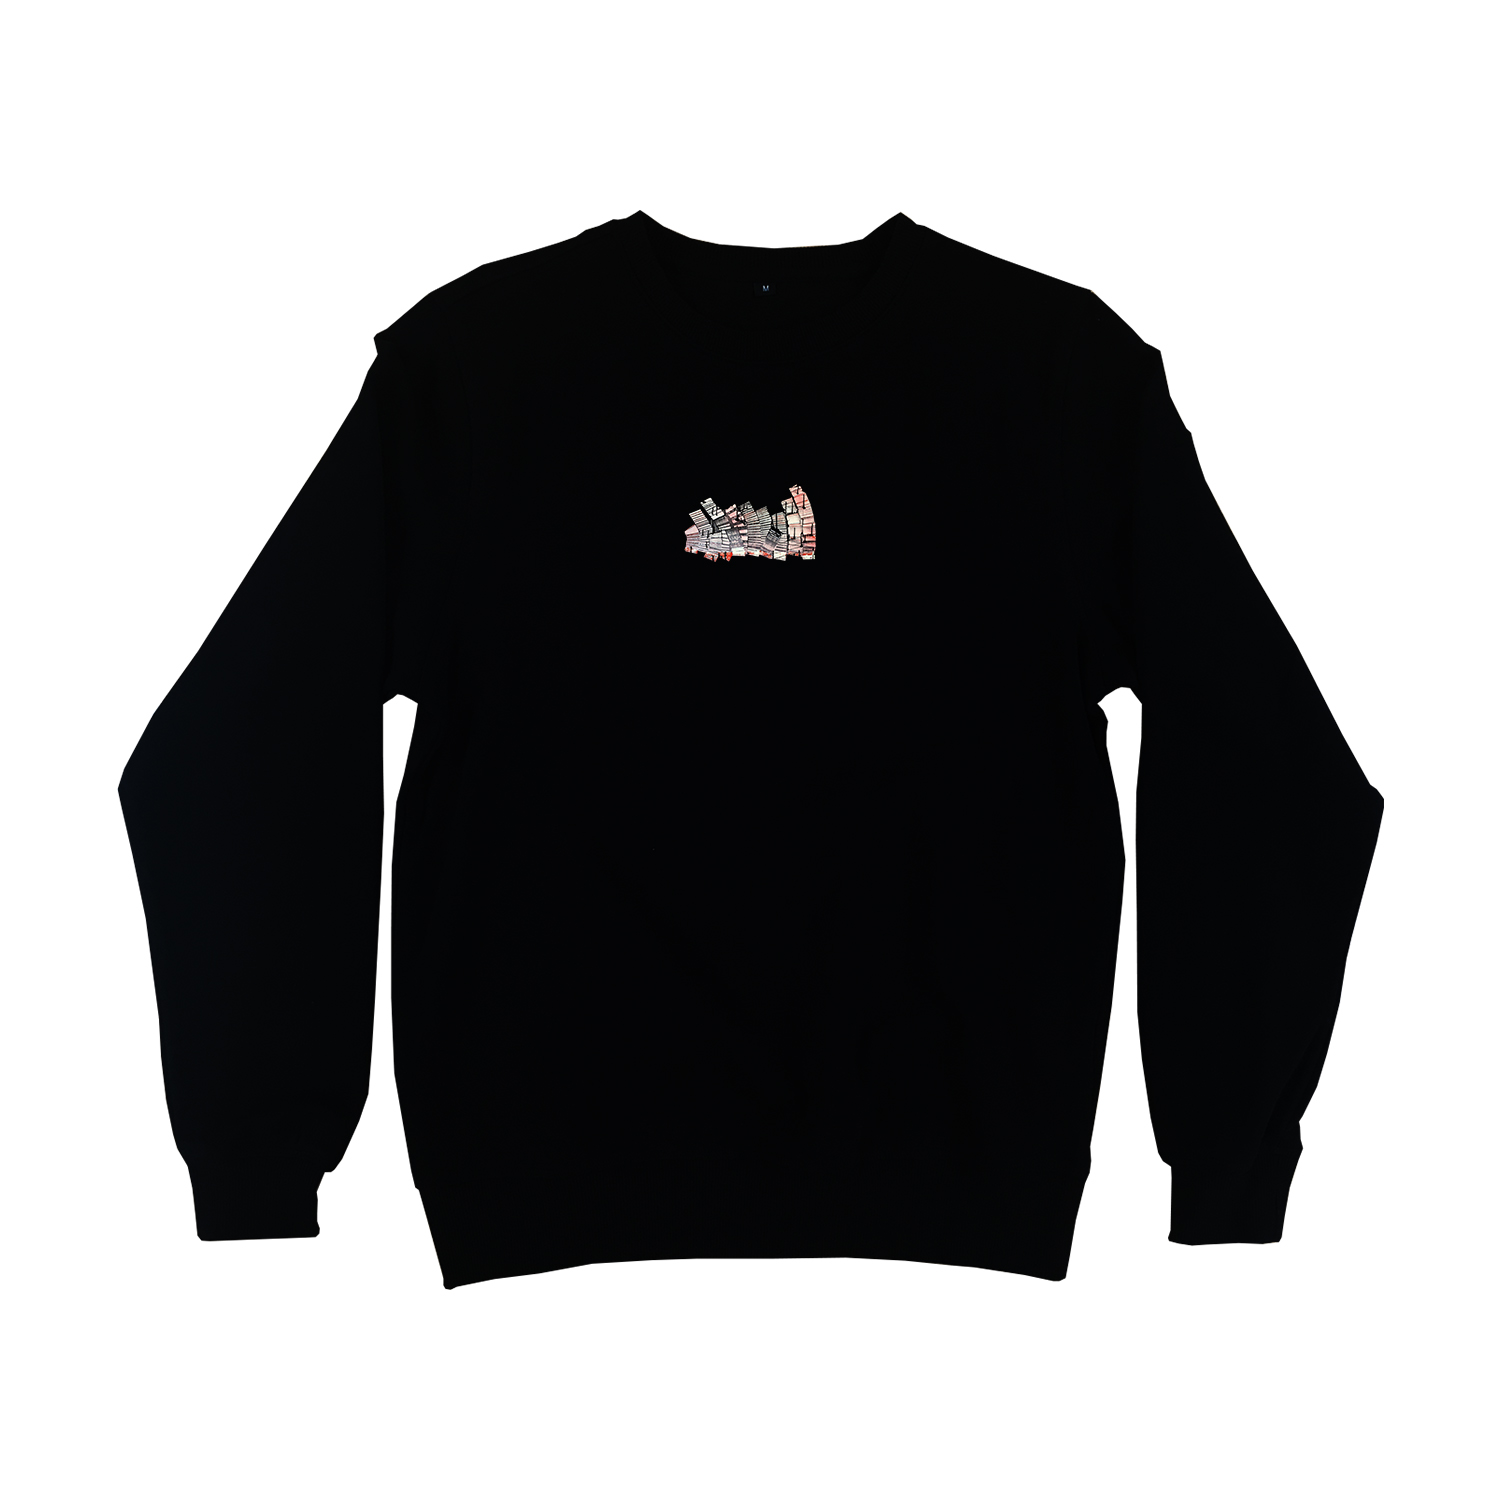 Sweater - zwart - voor - INCLUSIEF-EXCLUSIEF-FLEXIBEL by Ron Vogels - ONE AND ONE MAKES TWO